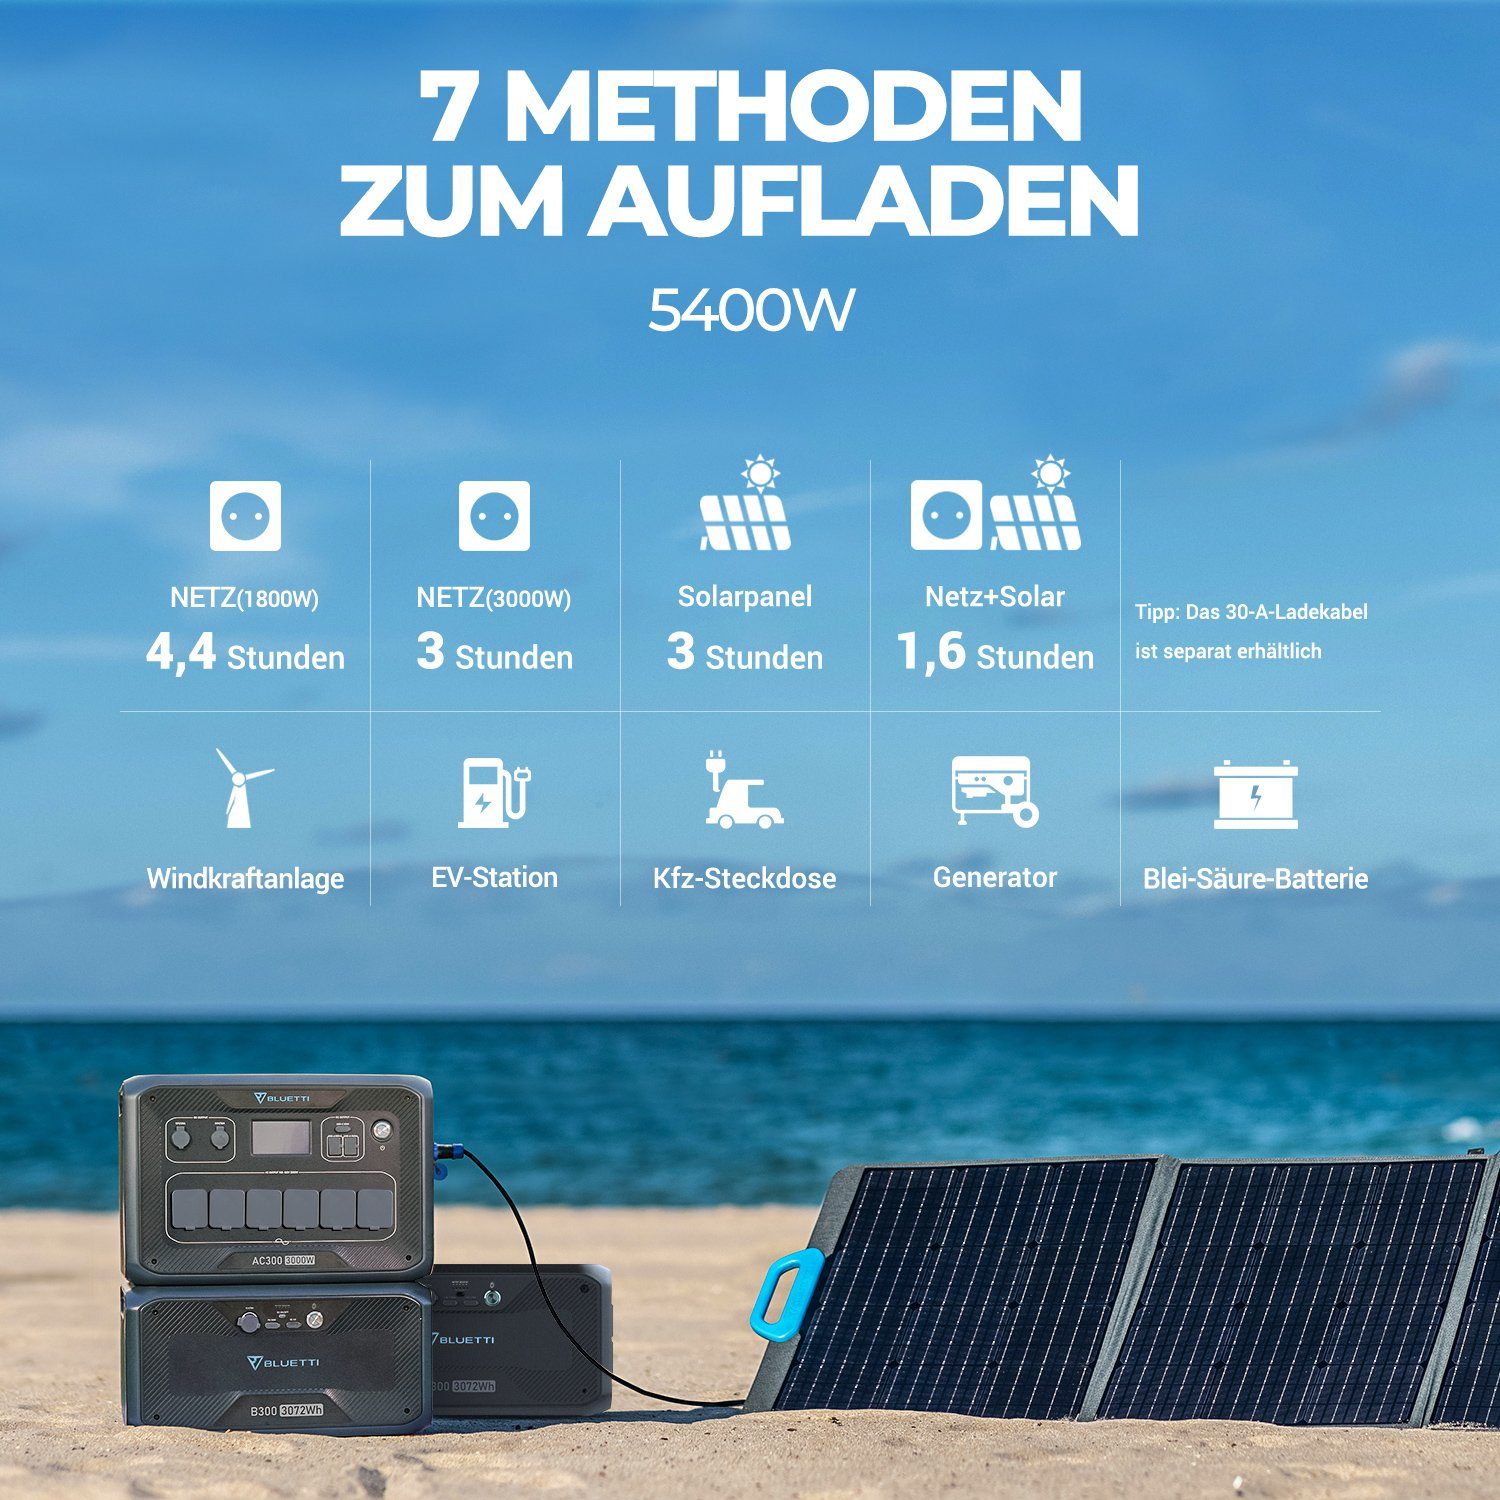 BLUETTI Solarpanel, 2350W Power AC300+2 Batterie LiFePO4 6144Wh Stromerzeuger mit Solargenerator Station, B300 (Solar 1-tlg), 3000W